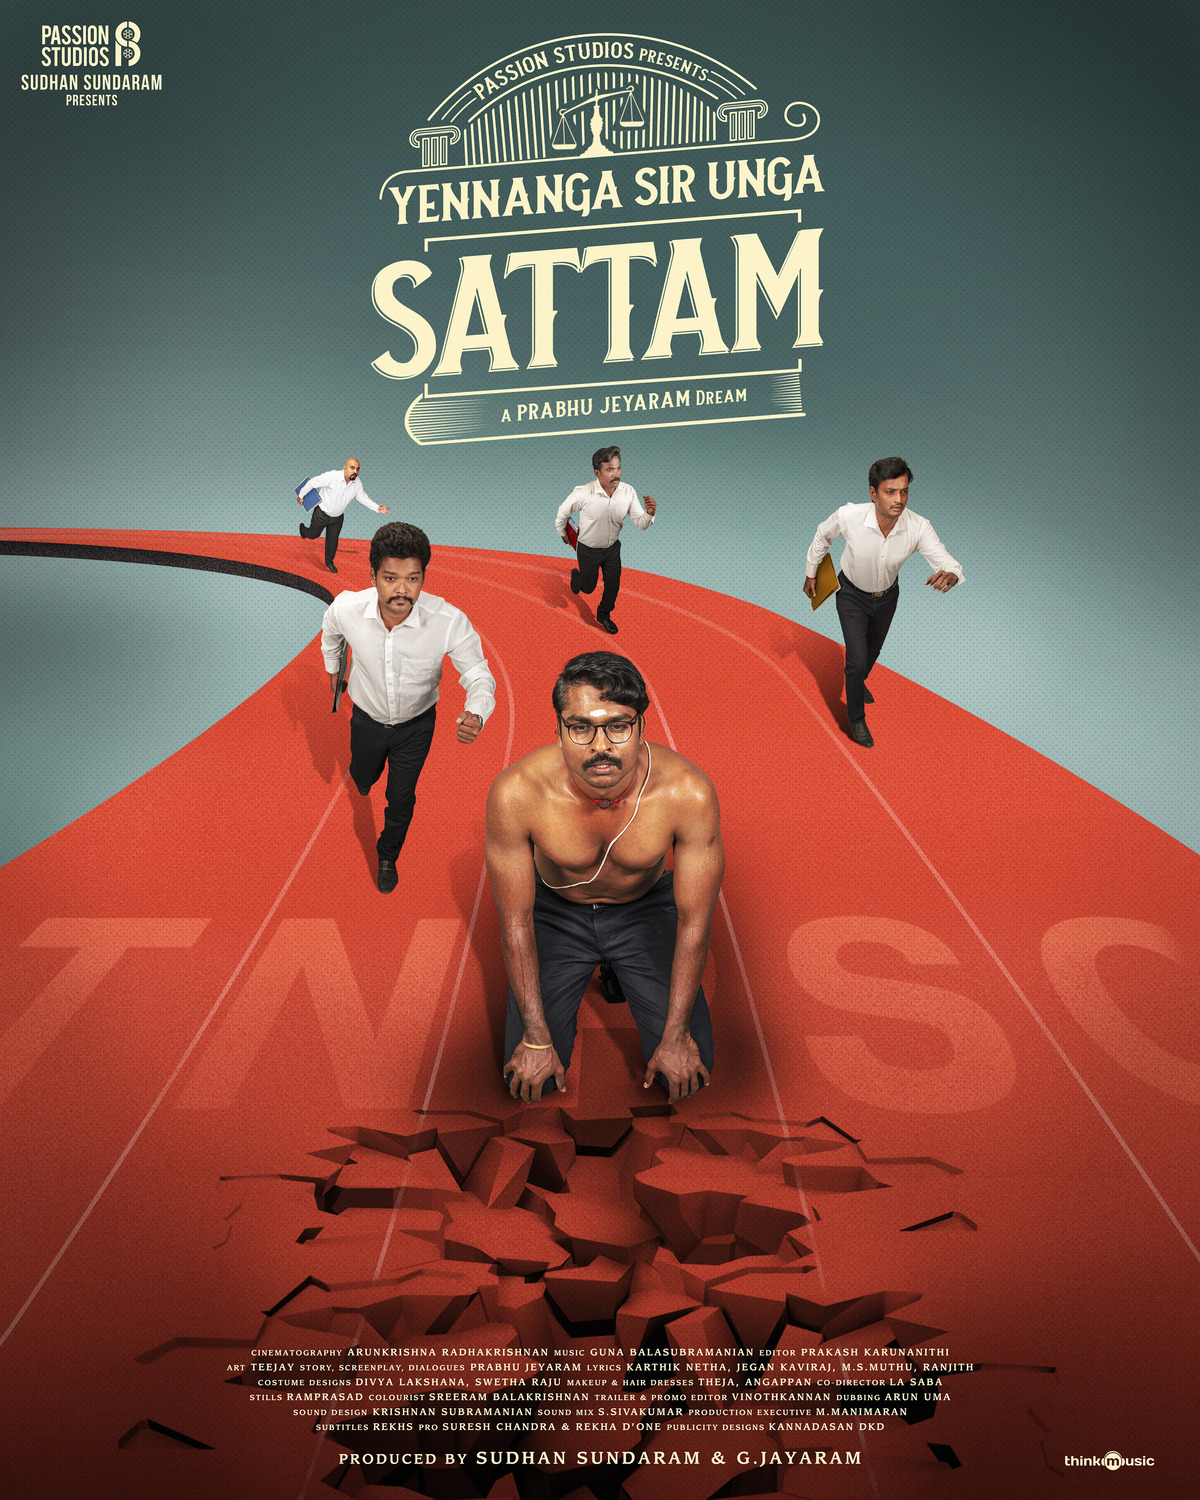 Extra Large Movie Poster Image for Yennanga Sir Unga Sattam (#3 of 4)